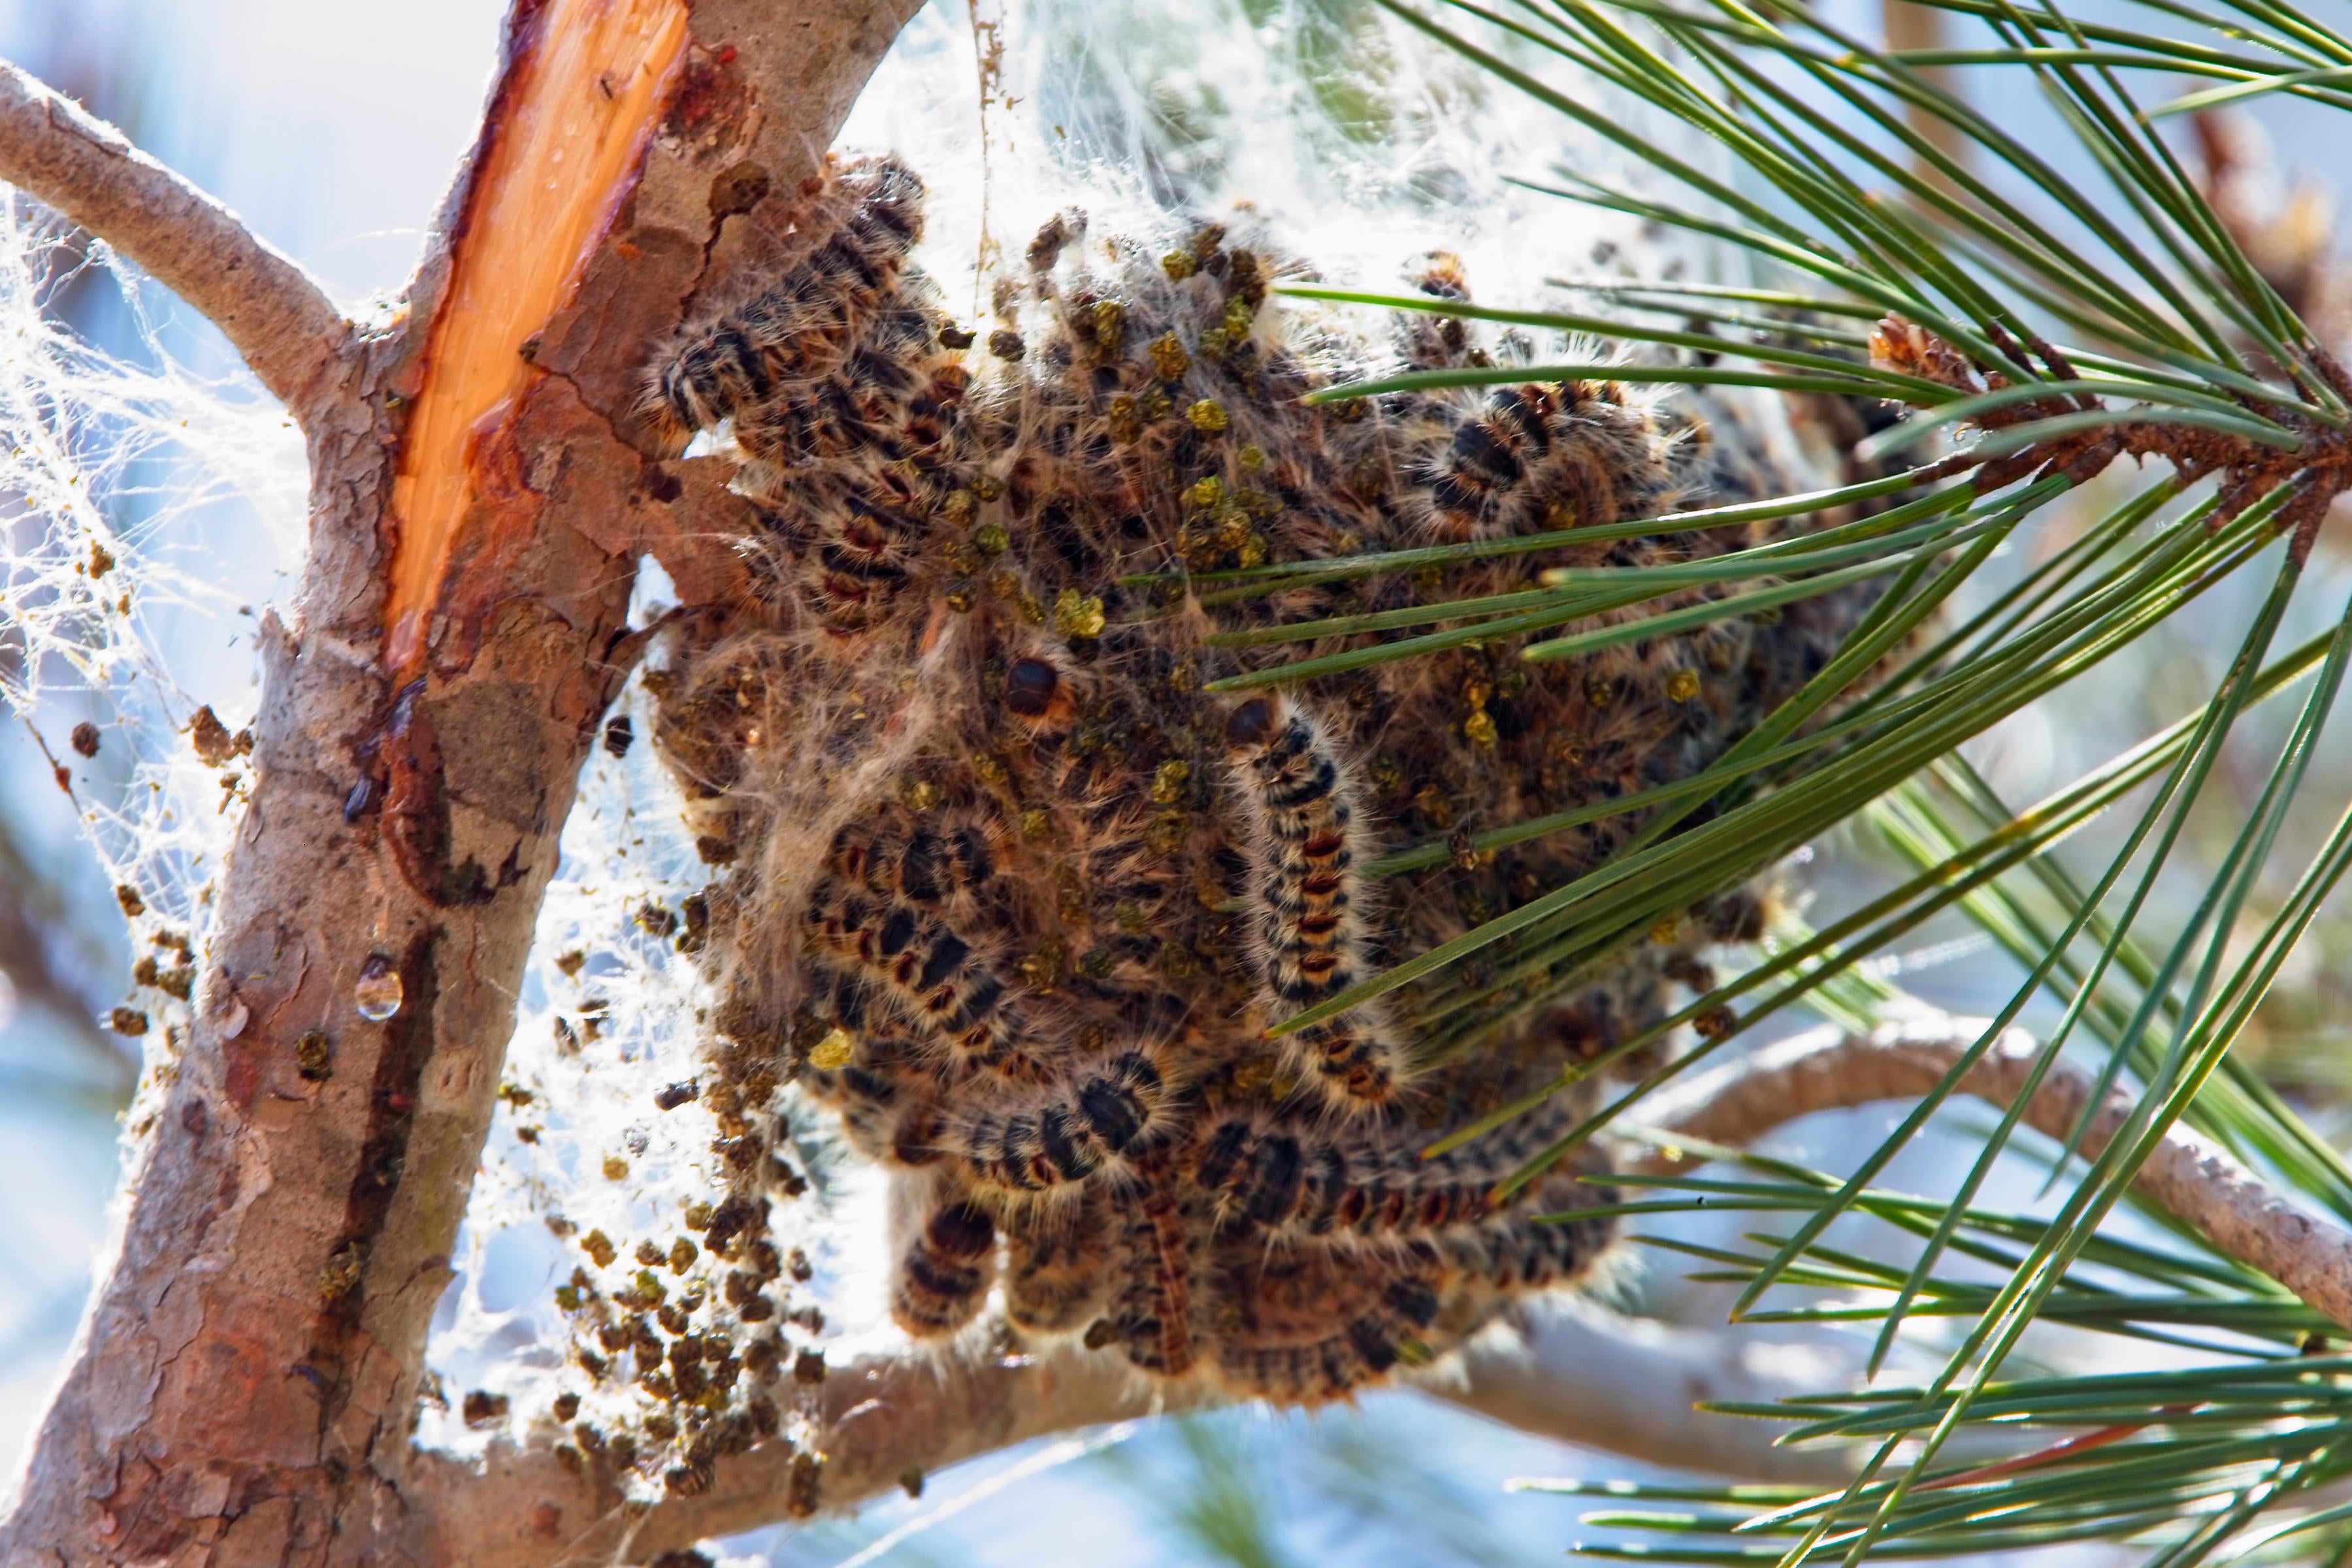 Pine Processionary Moth, (Thaumetopoea pityocampa), nest in pine tree, Pegeia Forest, Cyprus (Tony Mills/ Alamy)